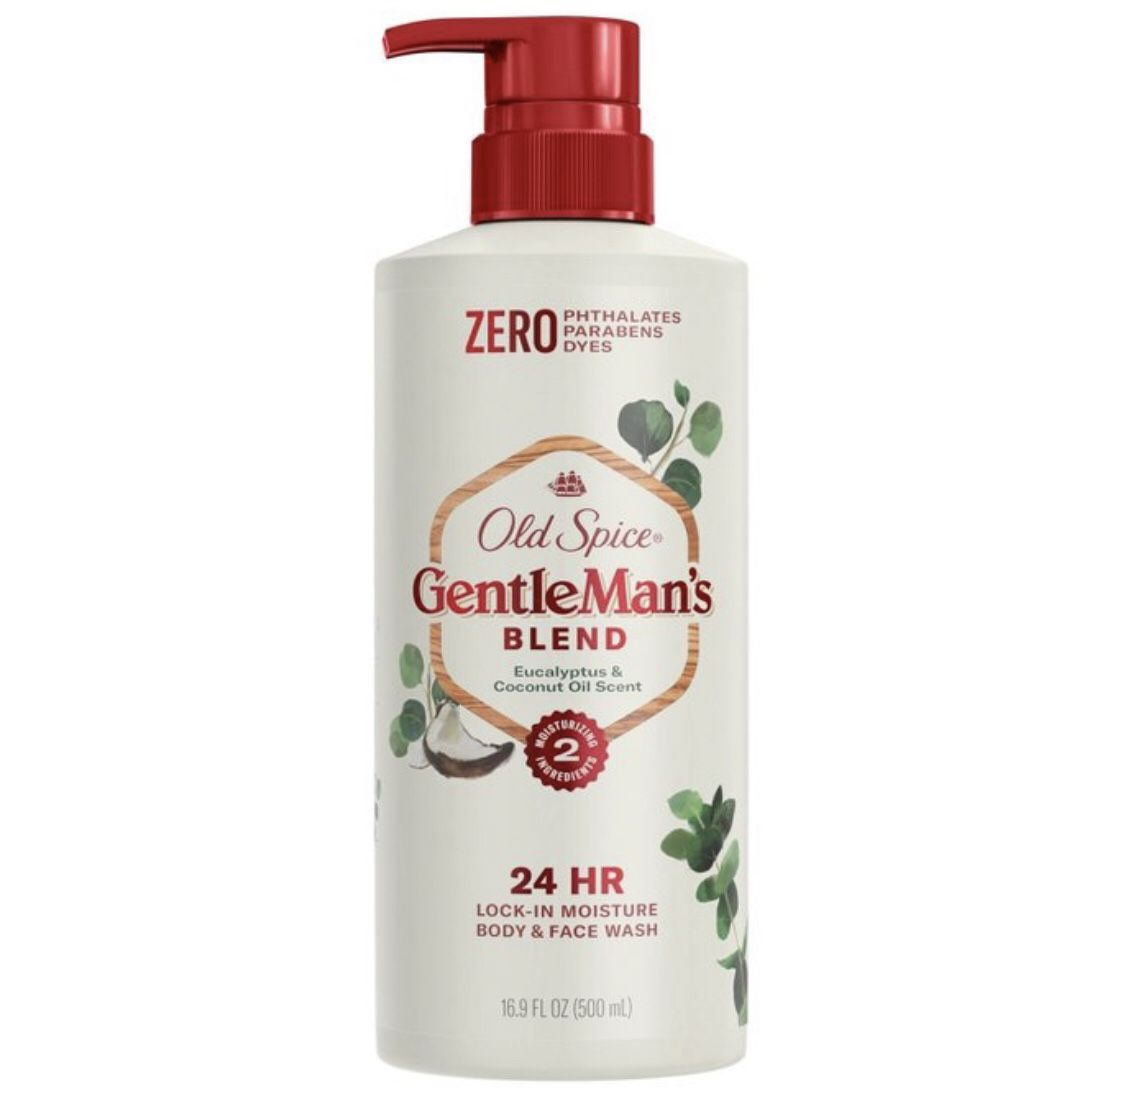 Old Spice Gentle Men’s Blend Eucalyptus & Coconut Oil Scent Body & Face Wash 